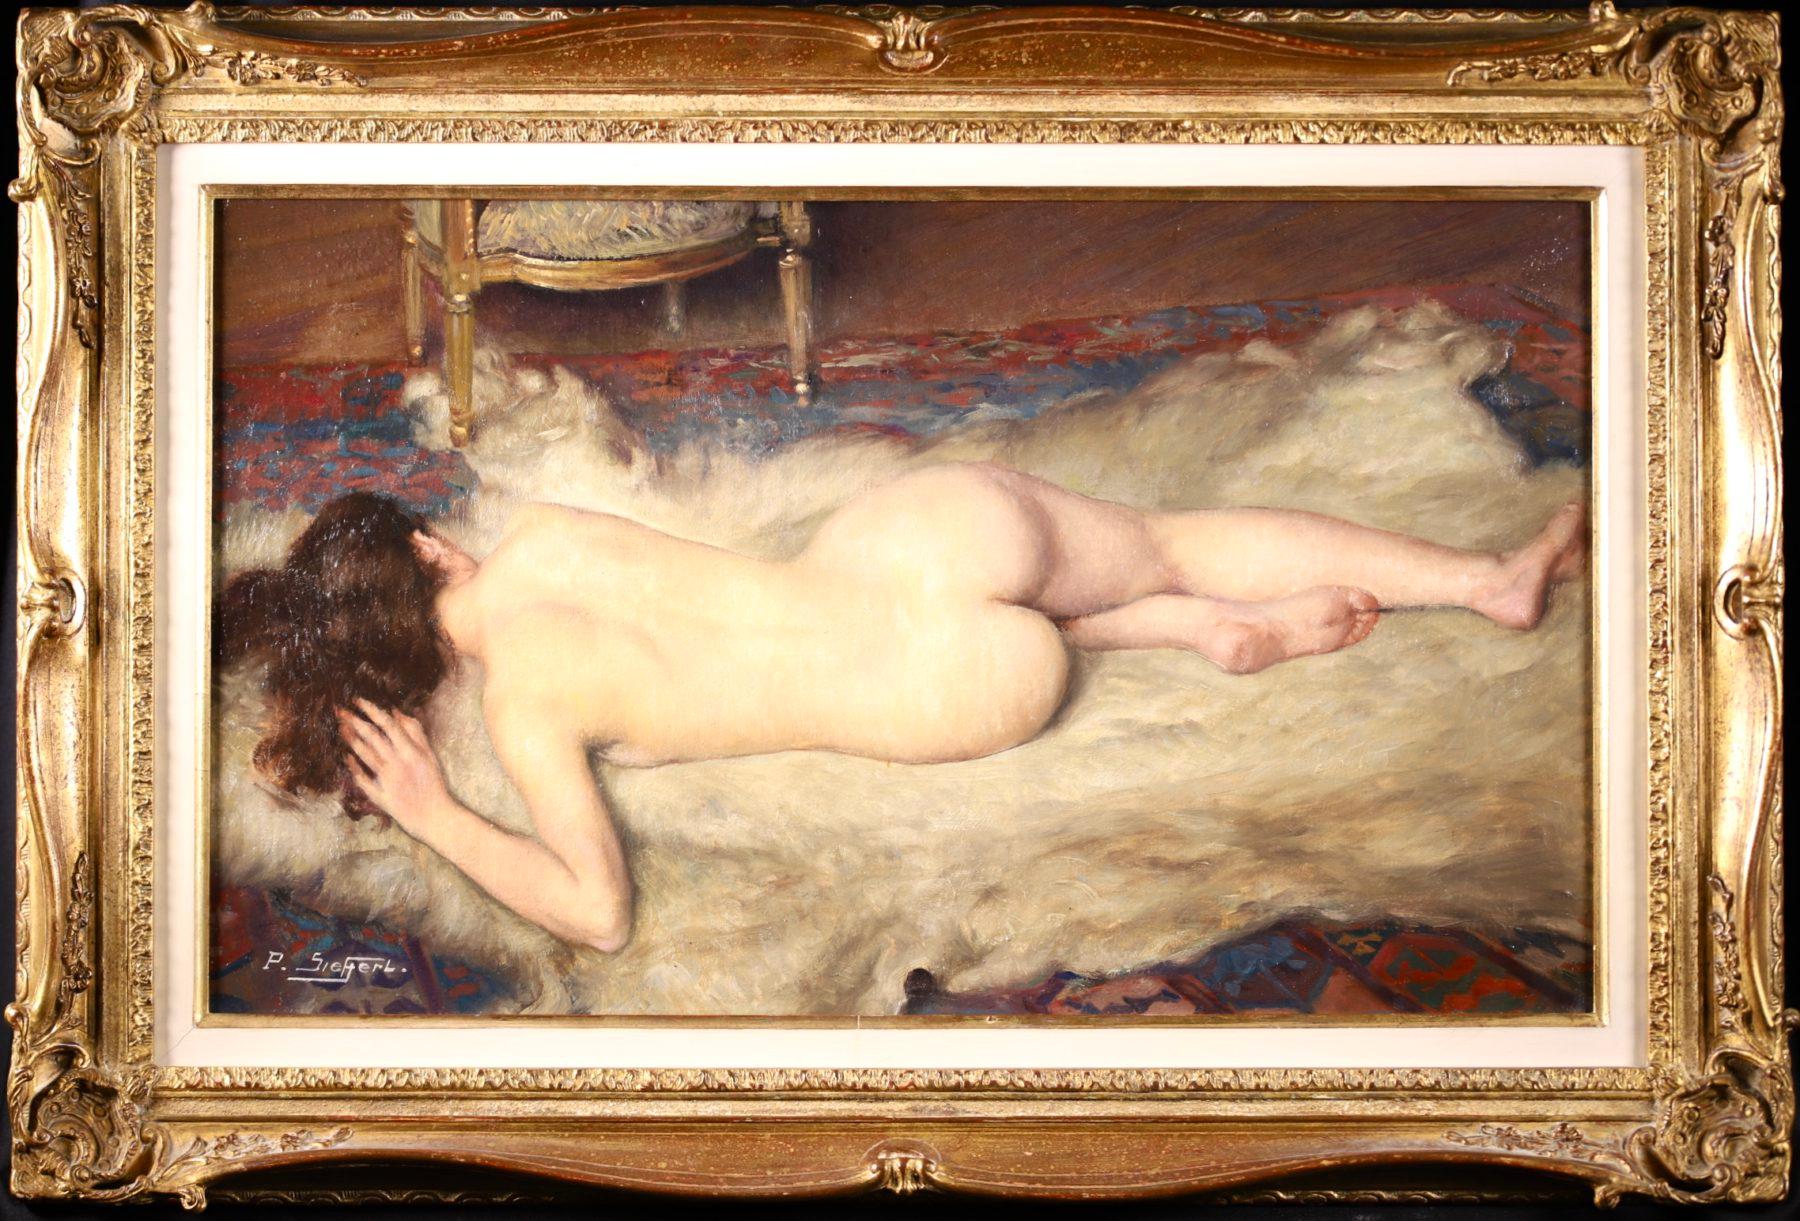 Nude on Animal Skin - Impressionist Oil, Portrait of a Nude by Paul Sieffert 1